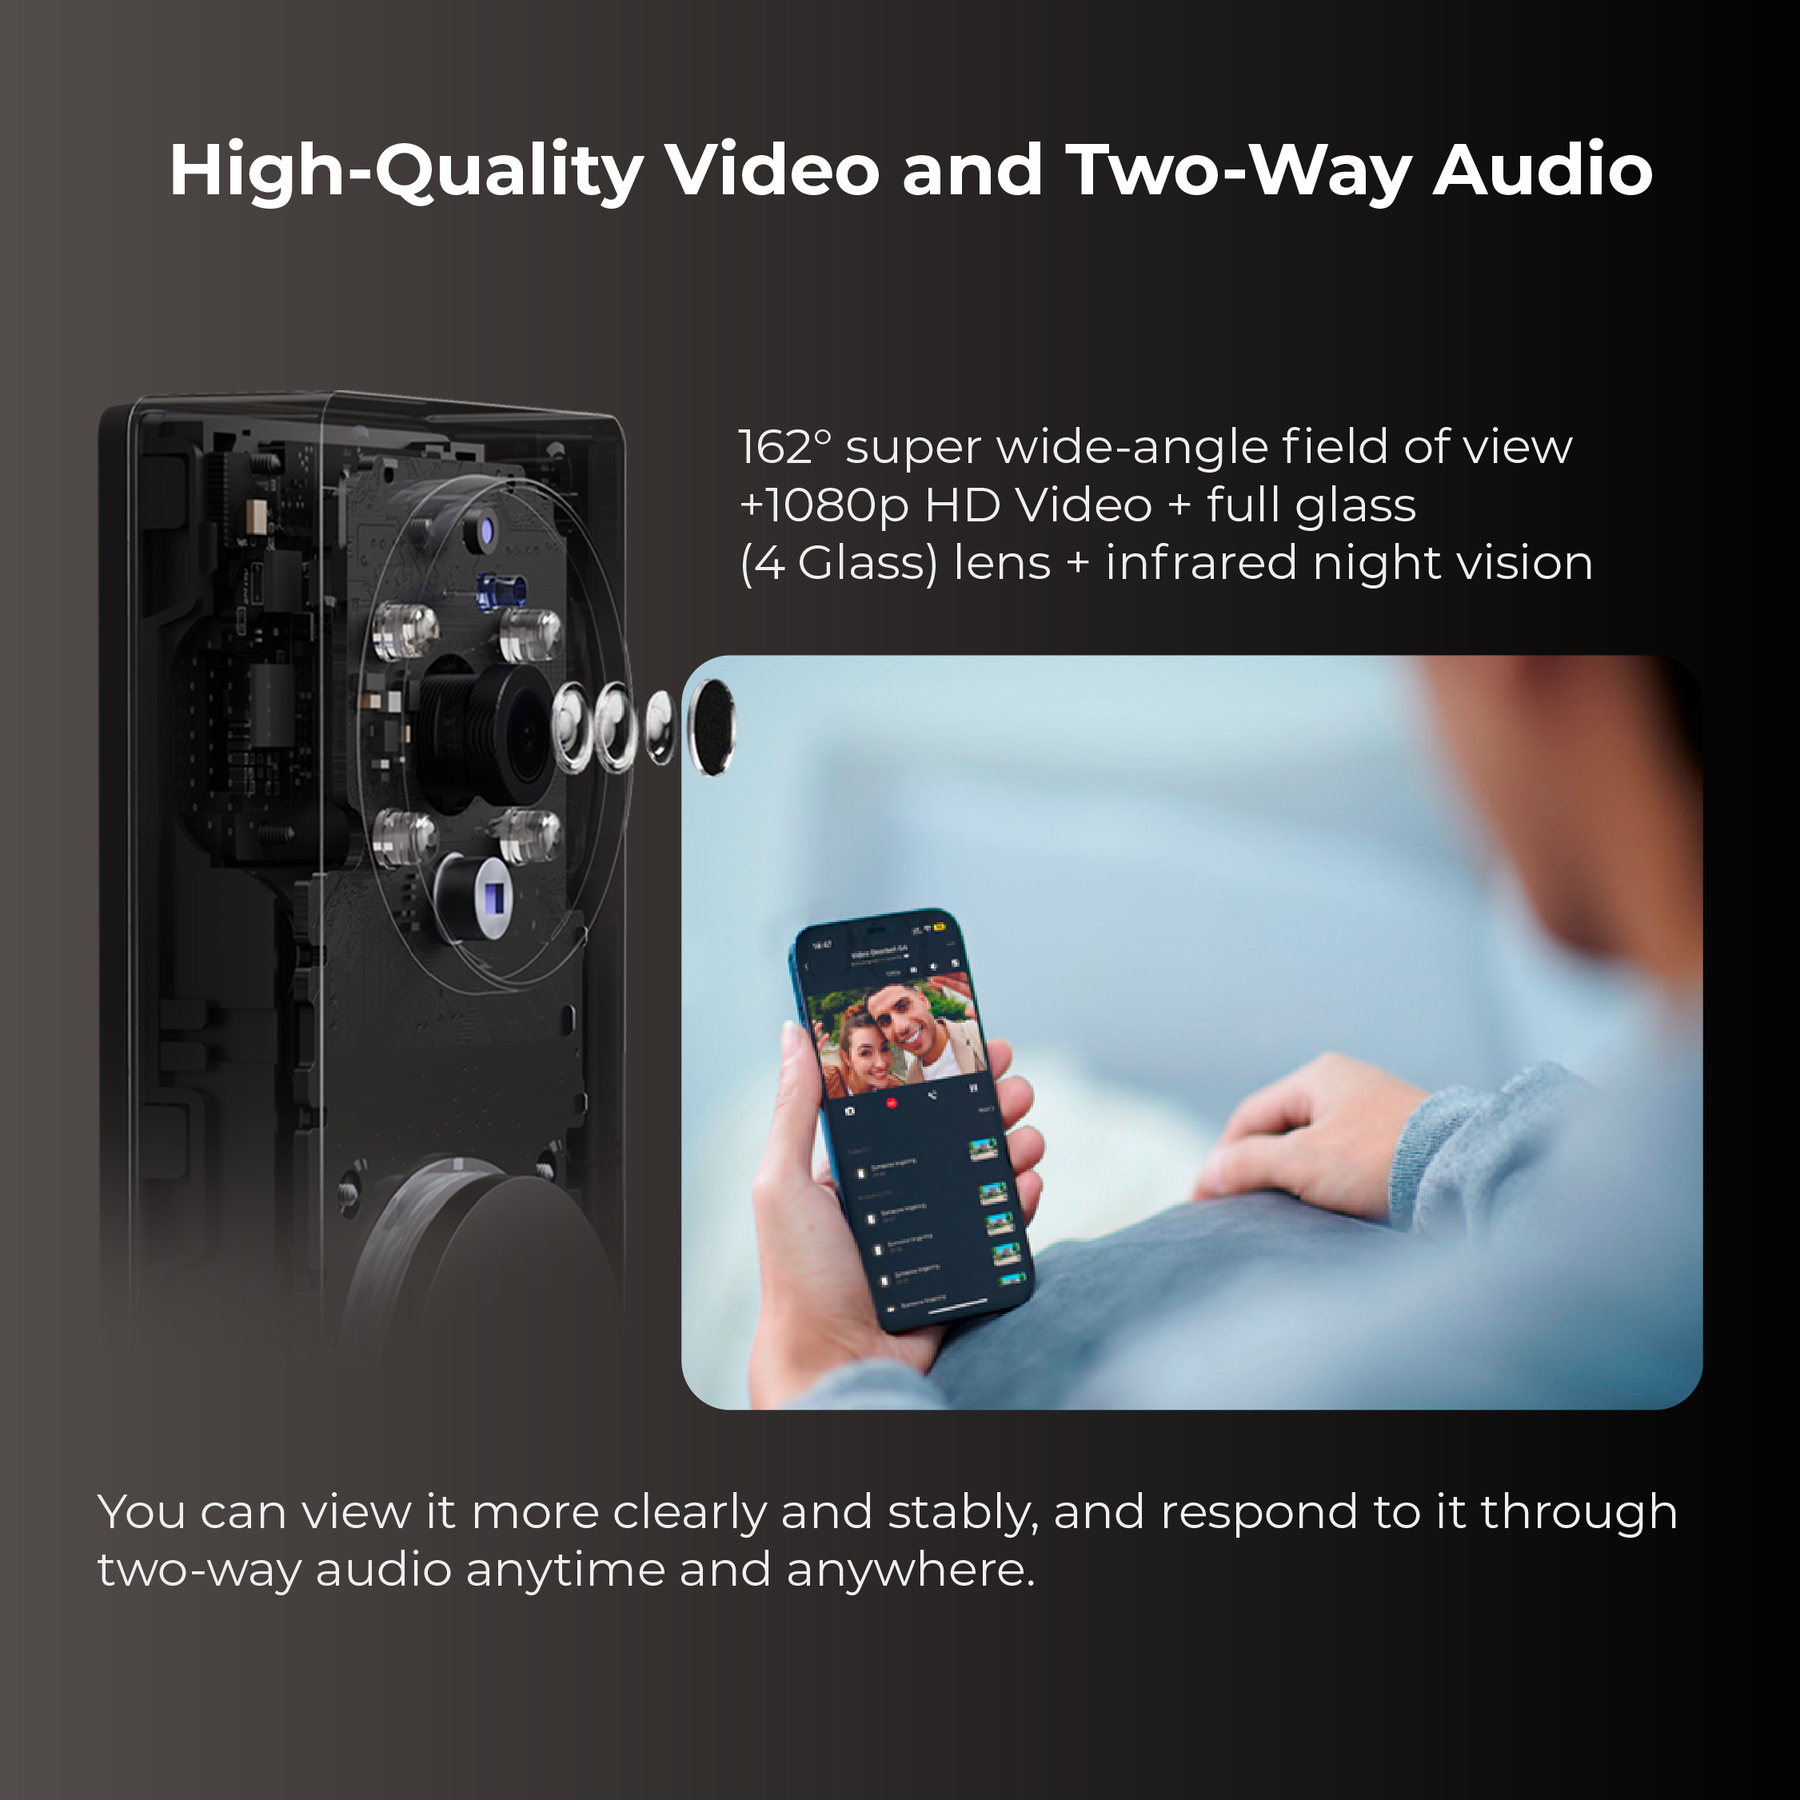 【GLOBAL】 Aqara G4 Smart Video Doorbell Face Smart Home Control Face Recognition Security Camera